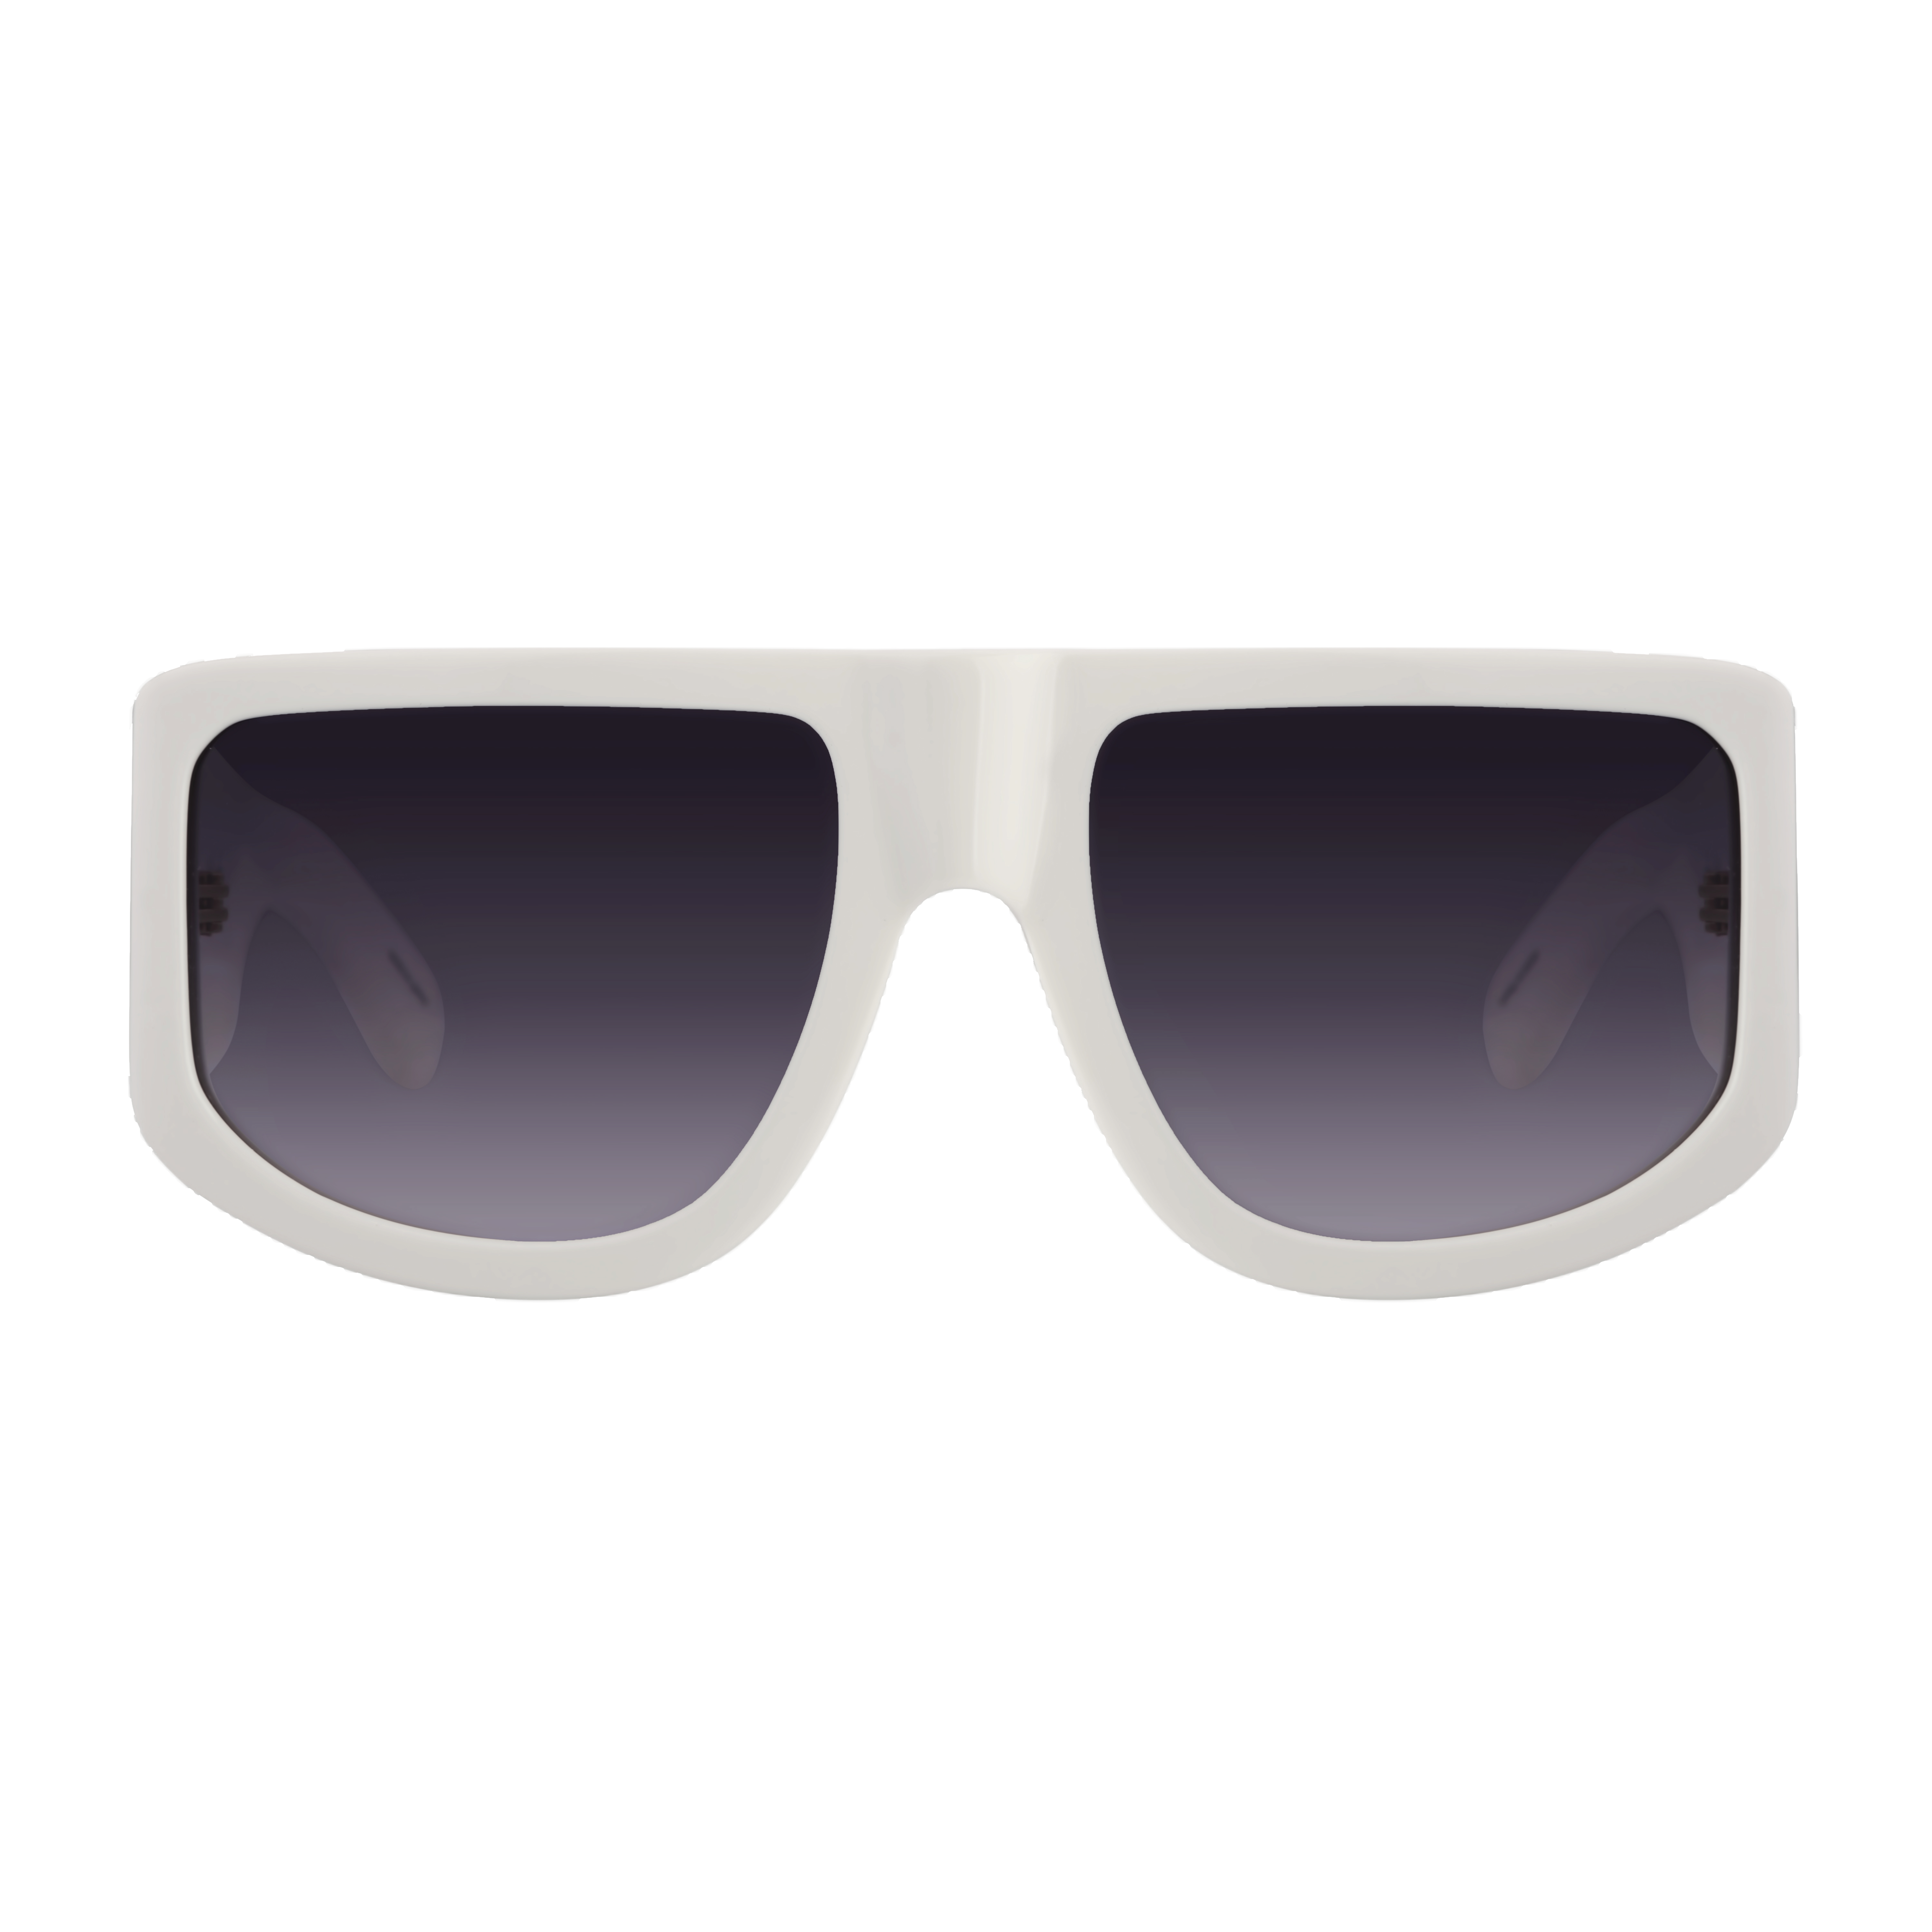 Sunglasses For Women - Shop Latest Frames of Womens Sunglasses Online |  Myntra